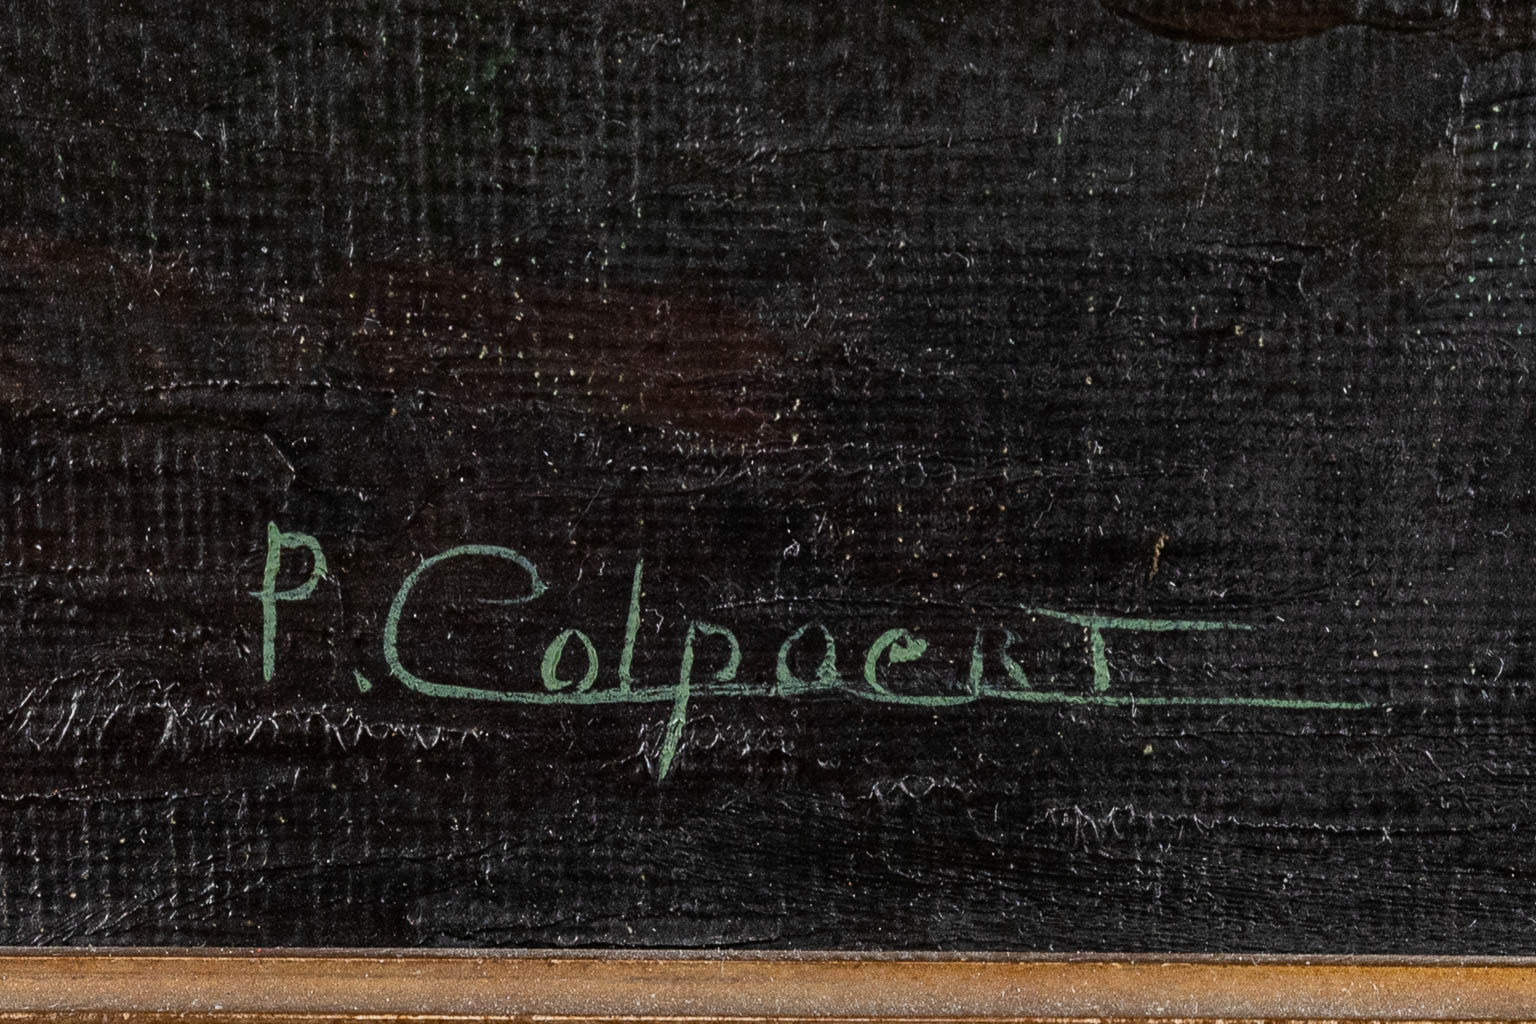 Pros COLPAERT (1923-1990) 